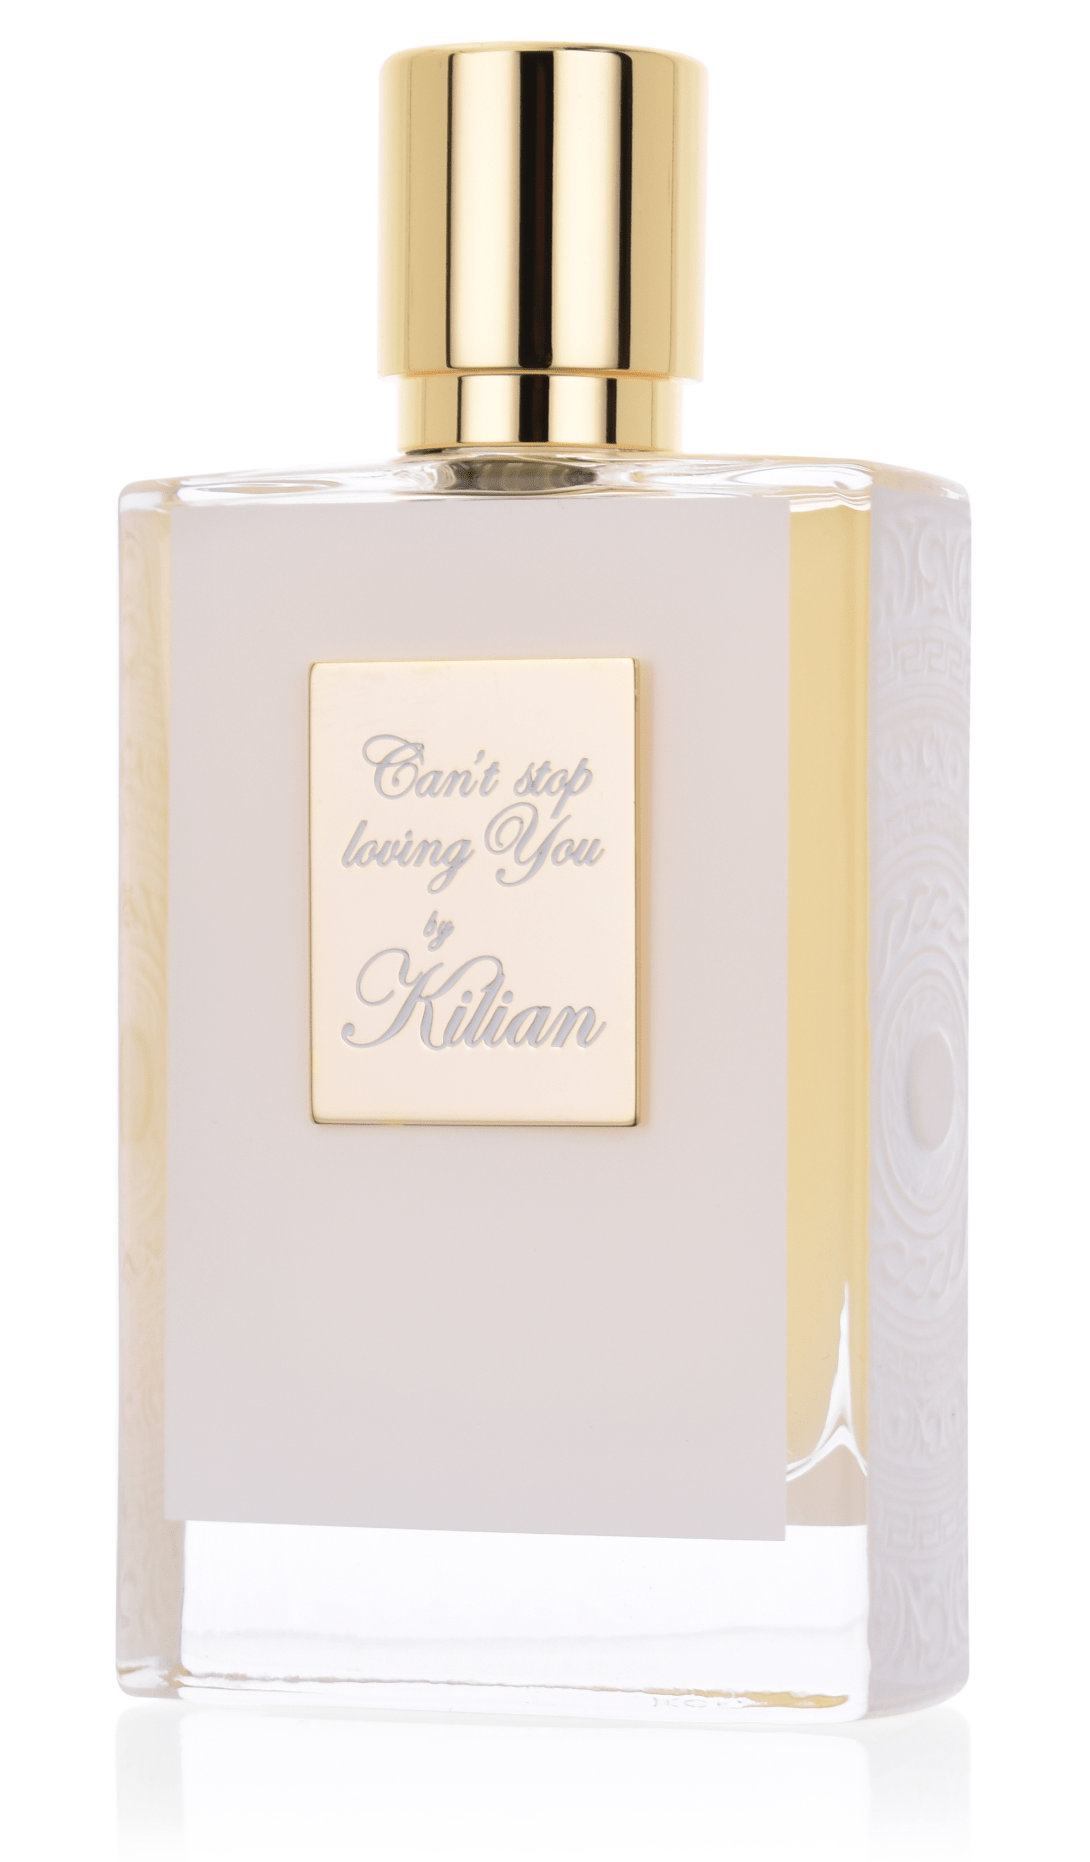 Kilian Can't stop loving you 5 ml Eau de Parfum Abfüllung  